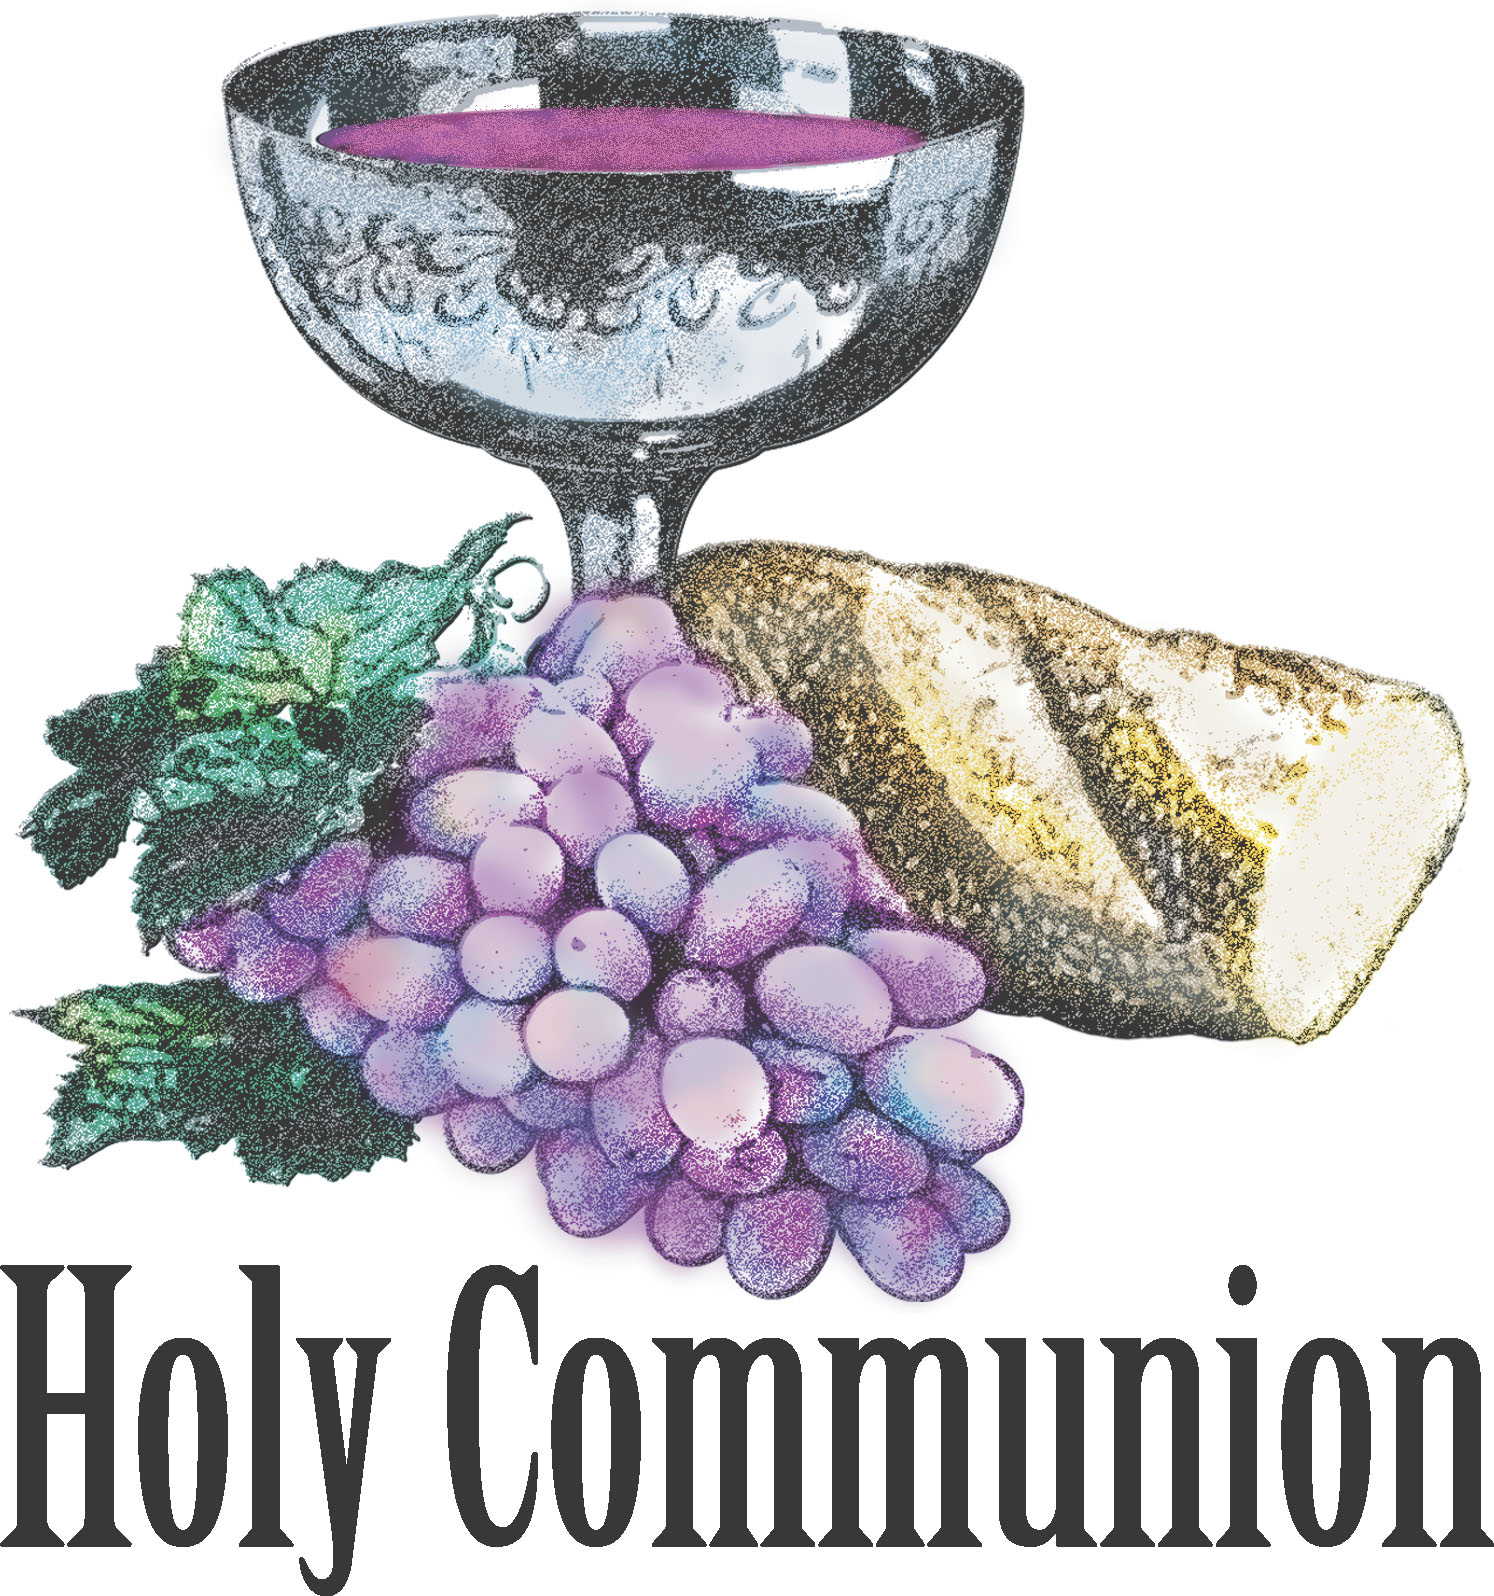 Emmaus   Blog Archive   Holy Communion